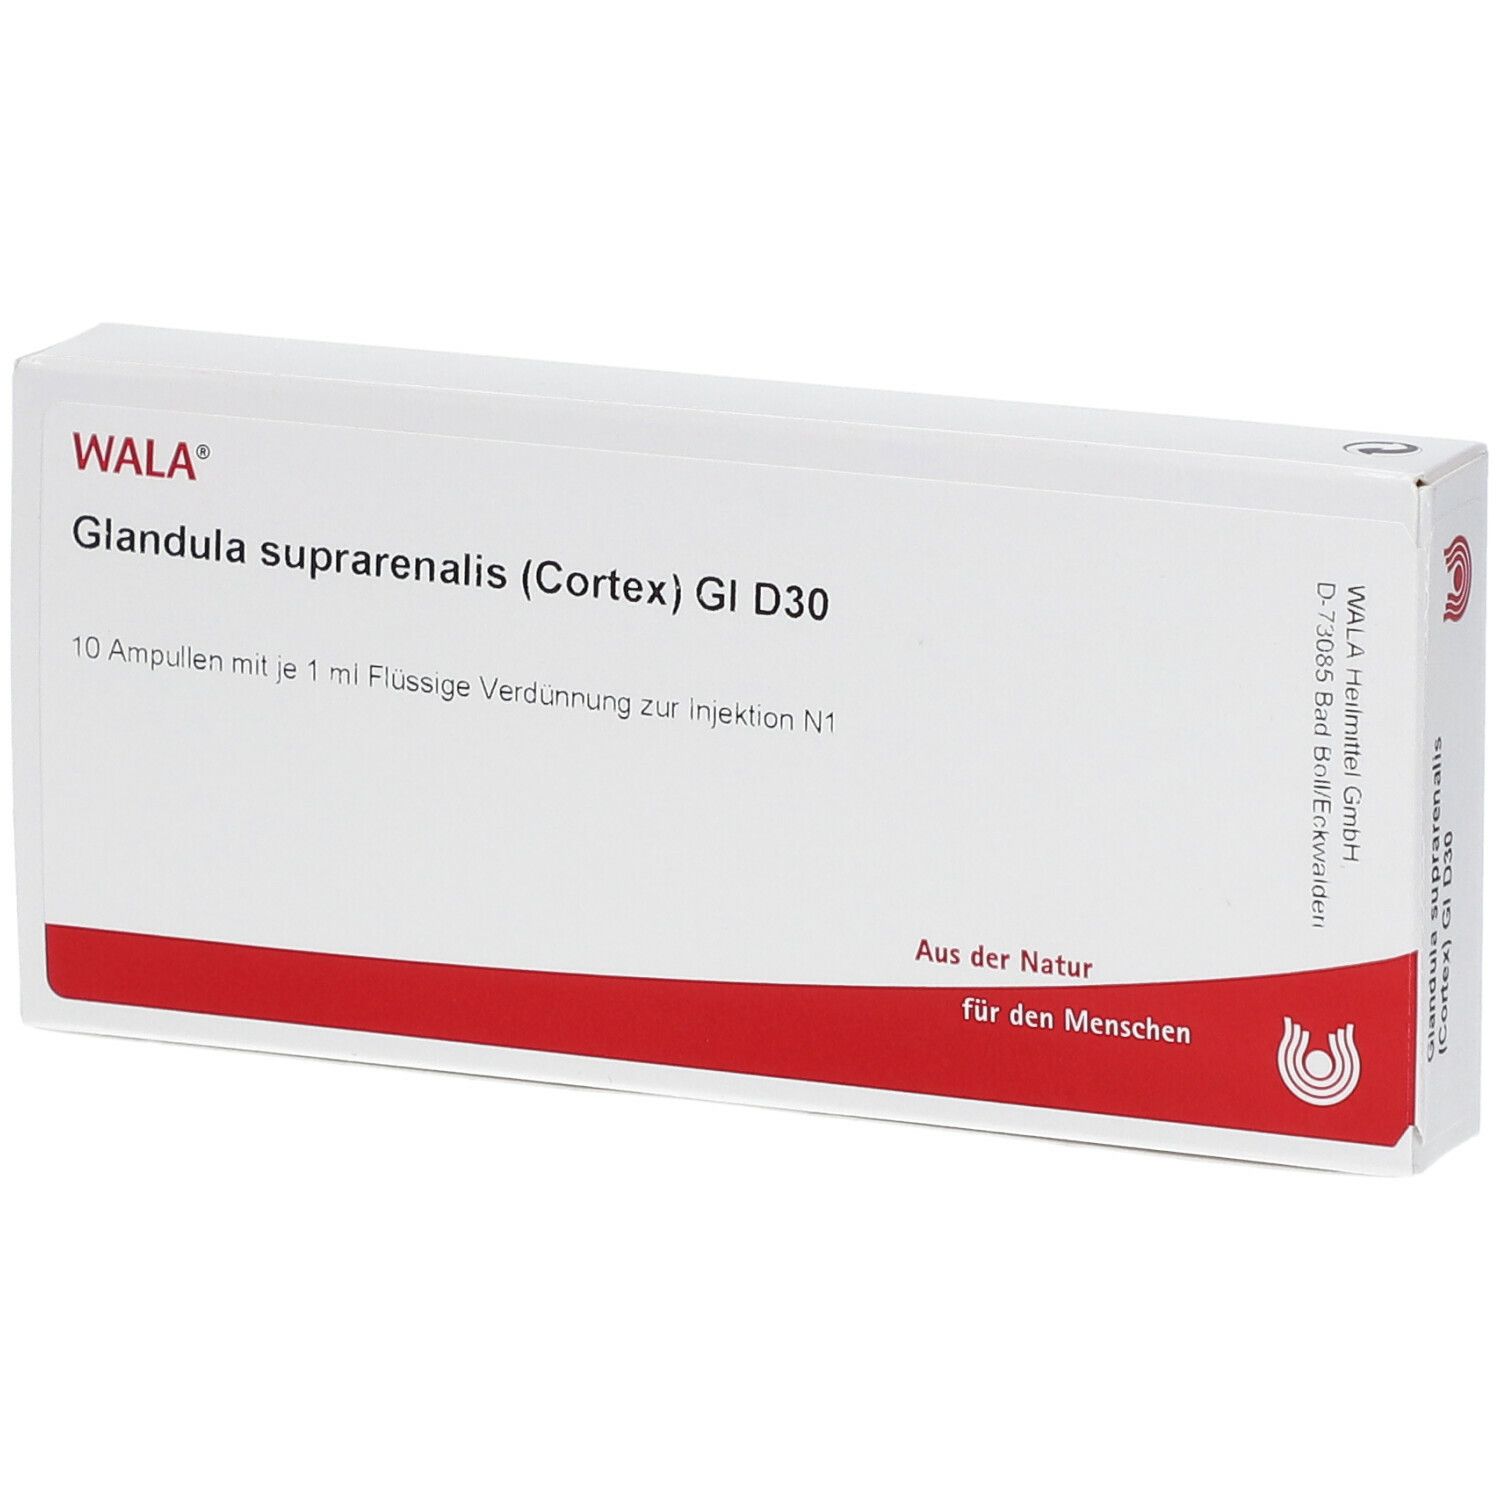 Wala® Glandula suprarenalis Cortex Gl D 30